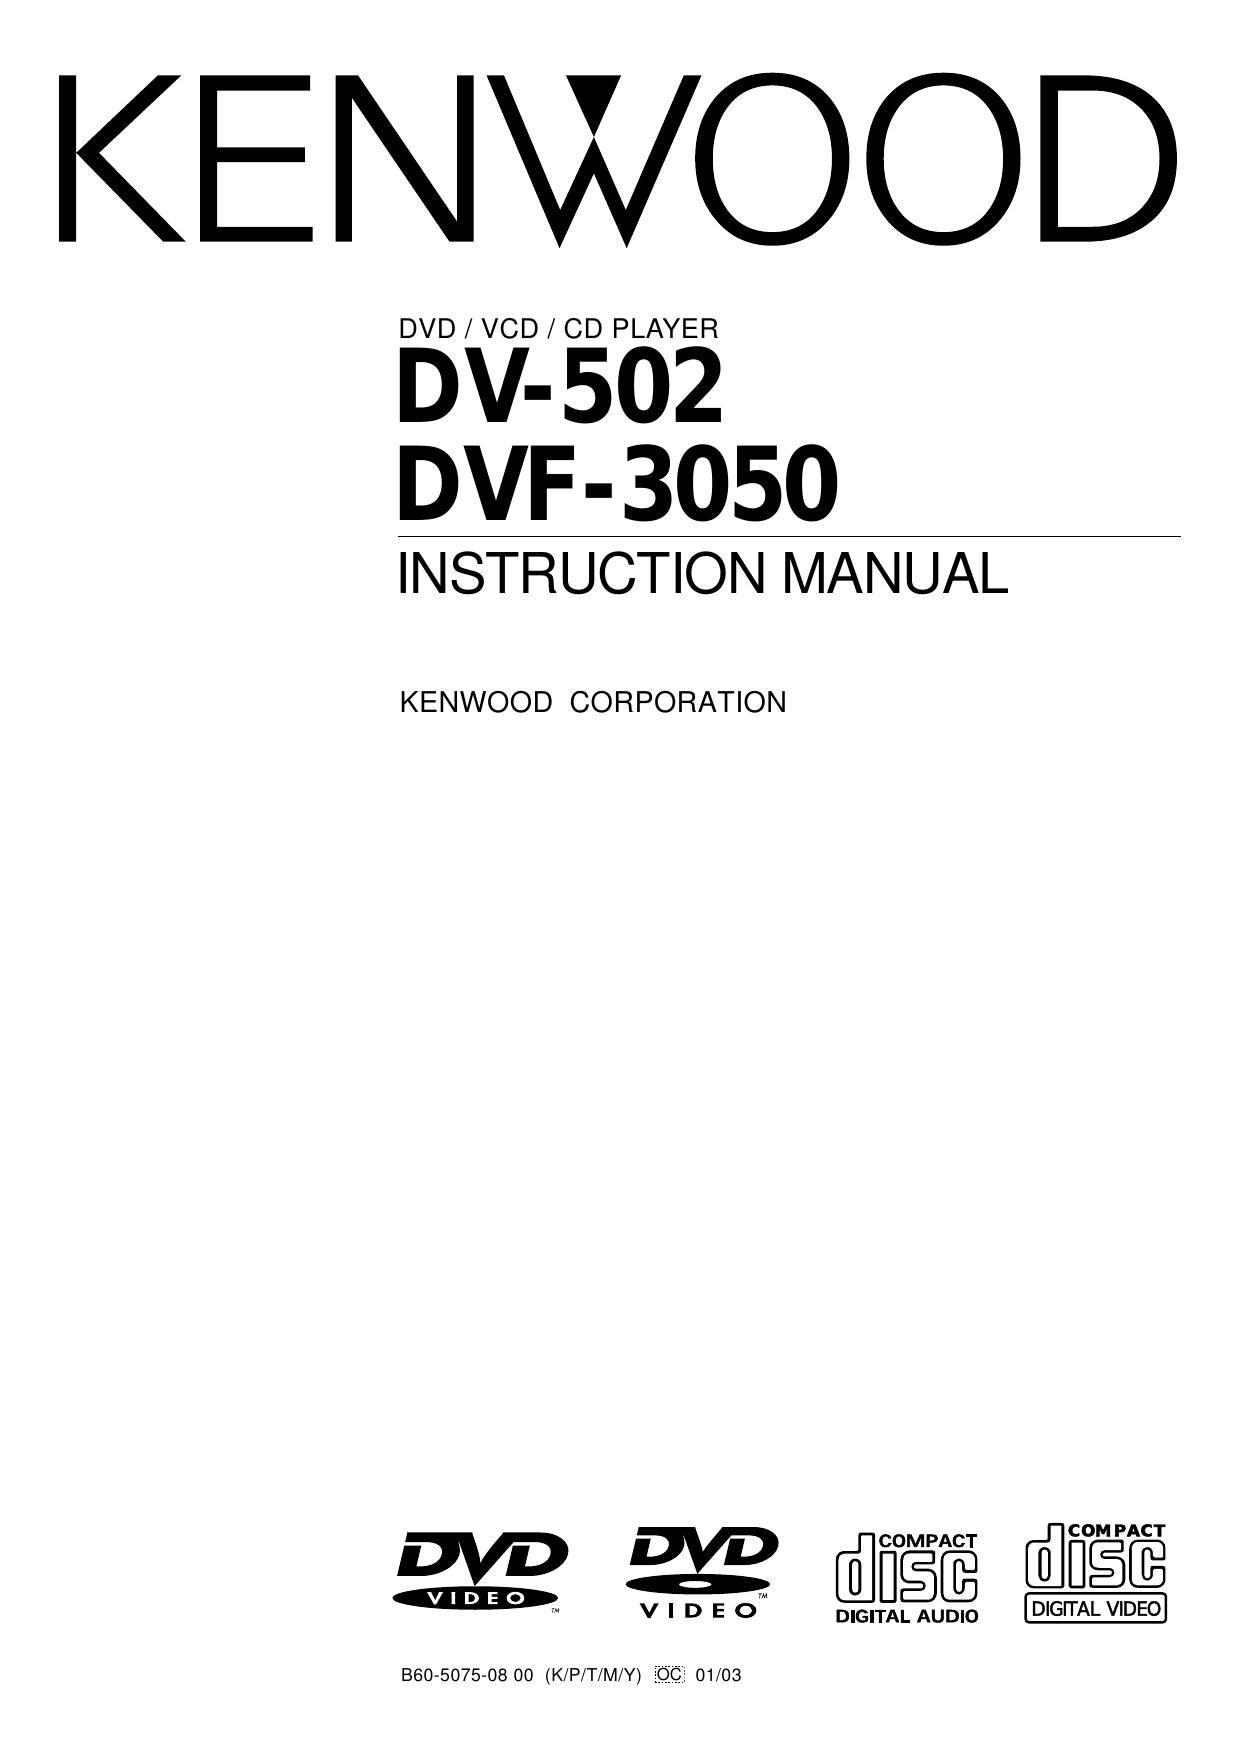 Kenwood DVF 3050 Owners Manual